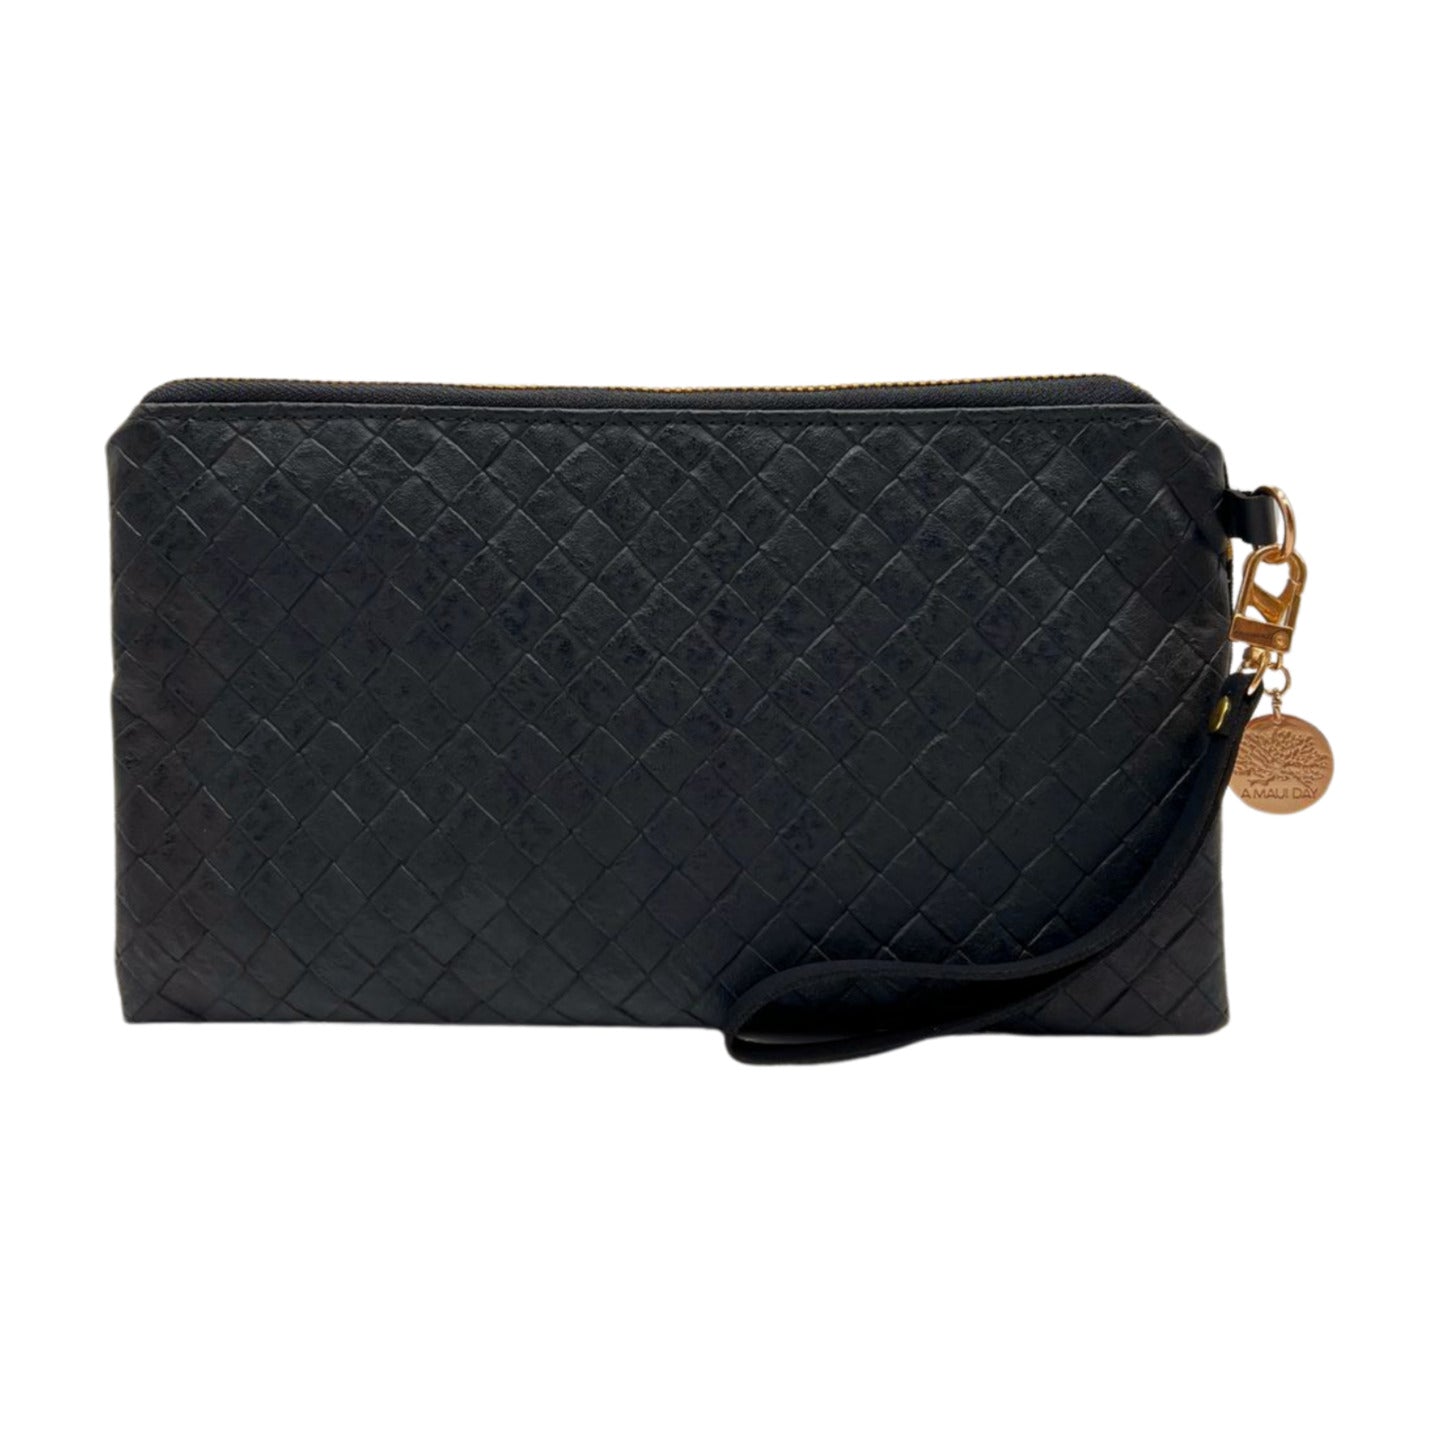 Pop-Up Mākeke - A Maui Day Original Handbags - Handprinted Small Handbag - Gold Quilt on Black Canvas - Back View